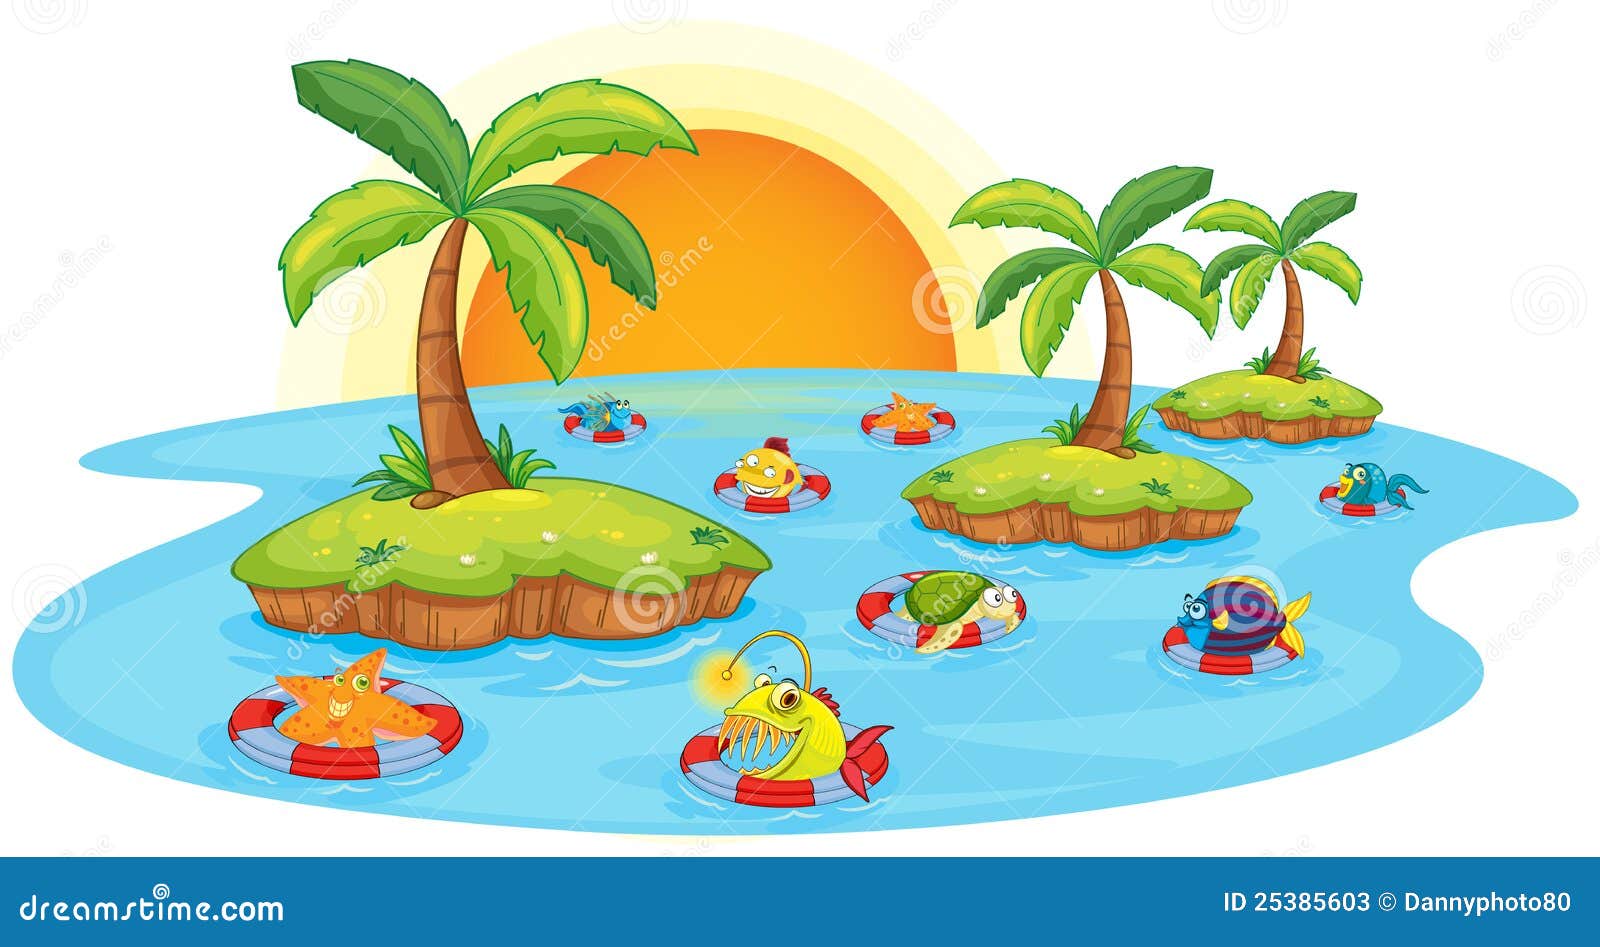 Fish in a pond stock illustration. Illustration of cartoon - 25385603